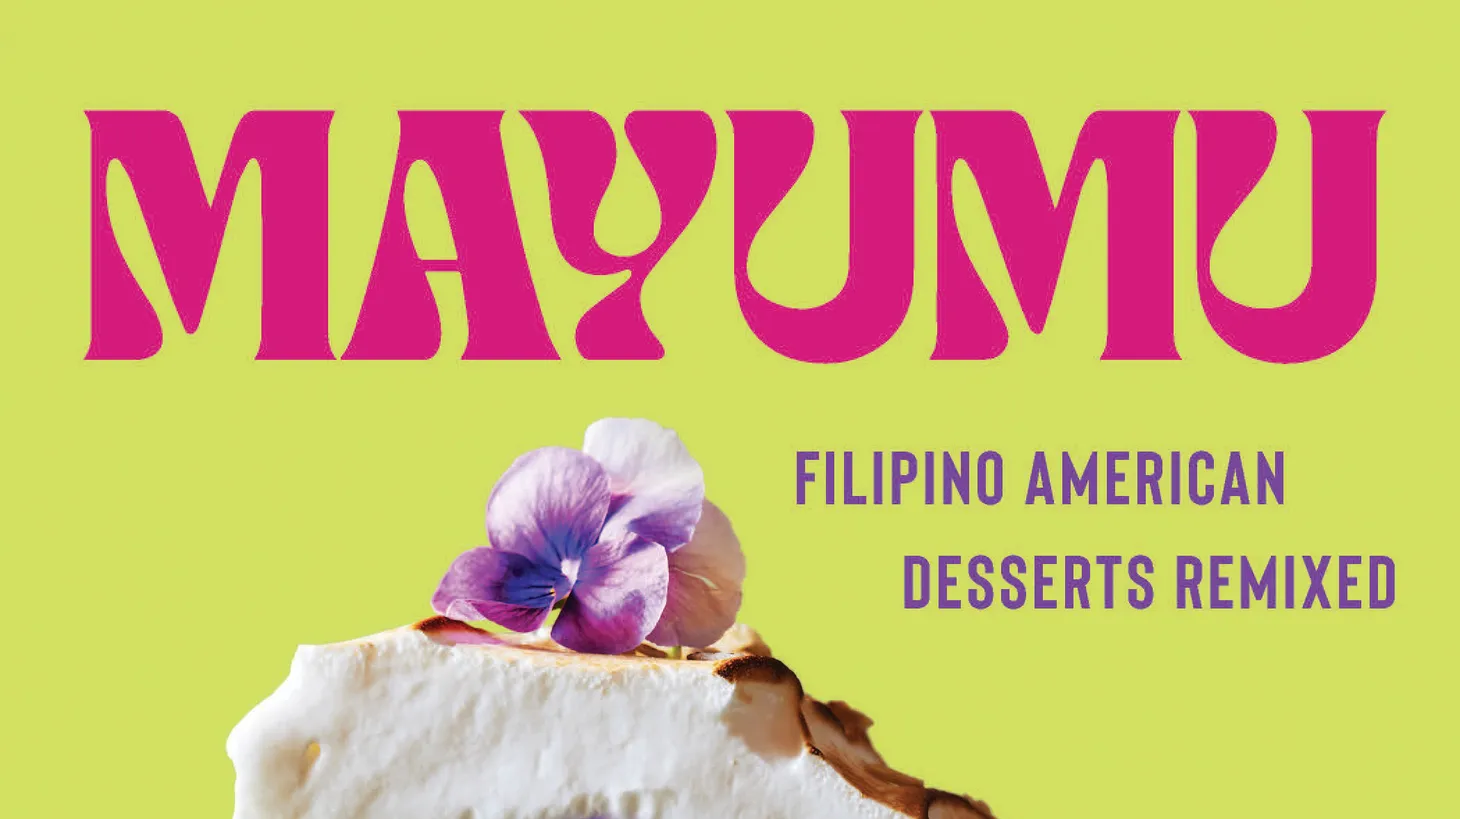 Abi Balingit’s new cookbook is “Mayumu: Filipino American Desserts Remixed.”